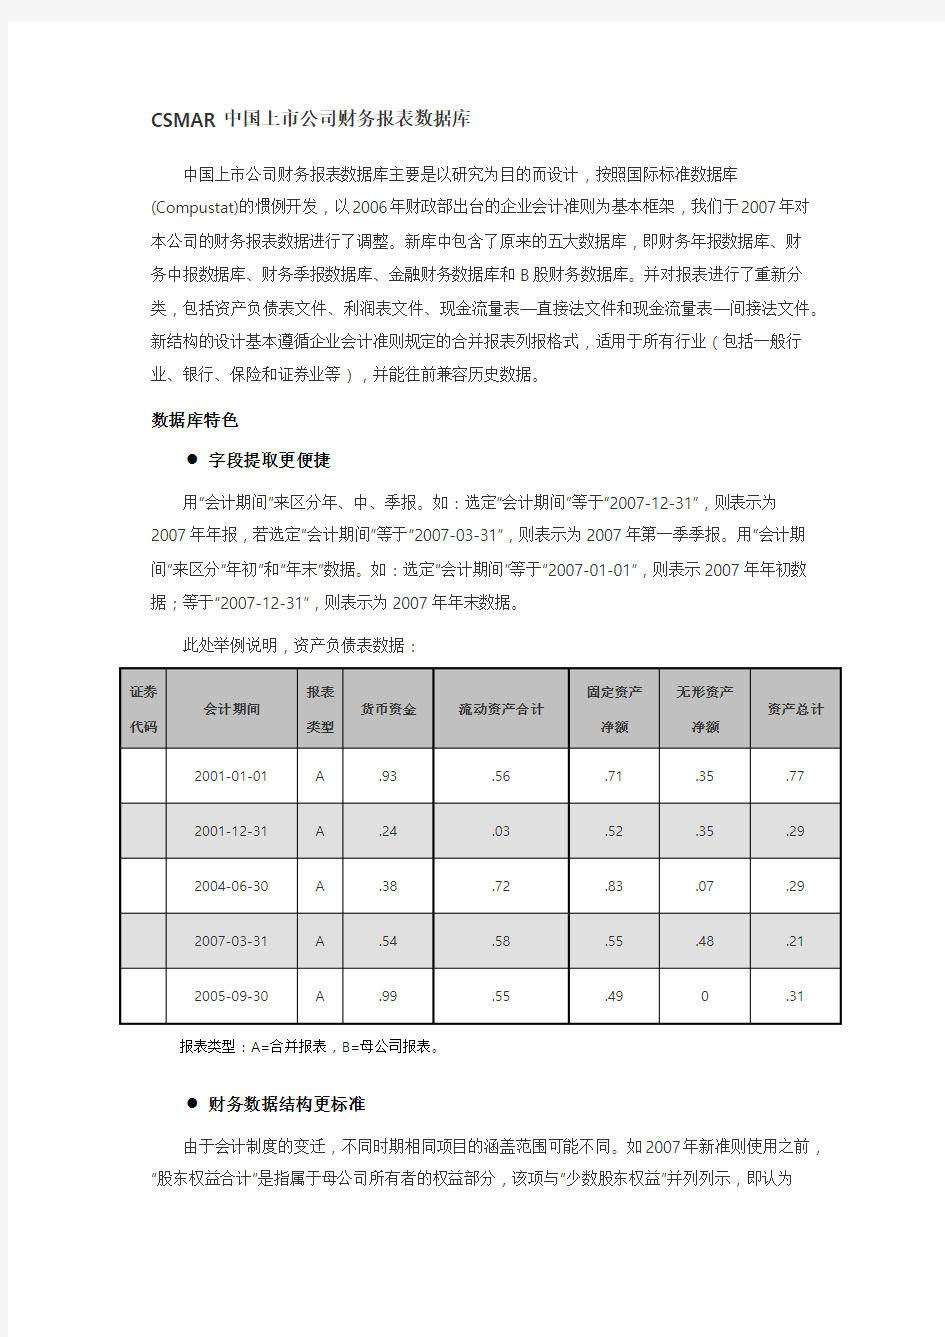 CSMAR中国上市公司财务报表数据库